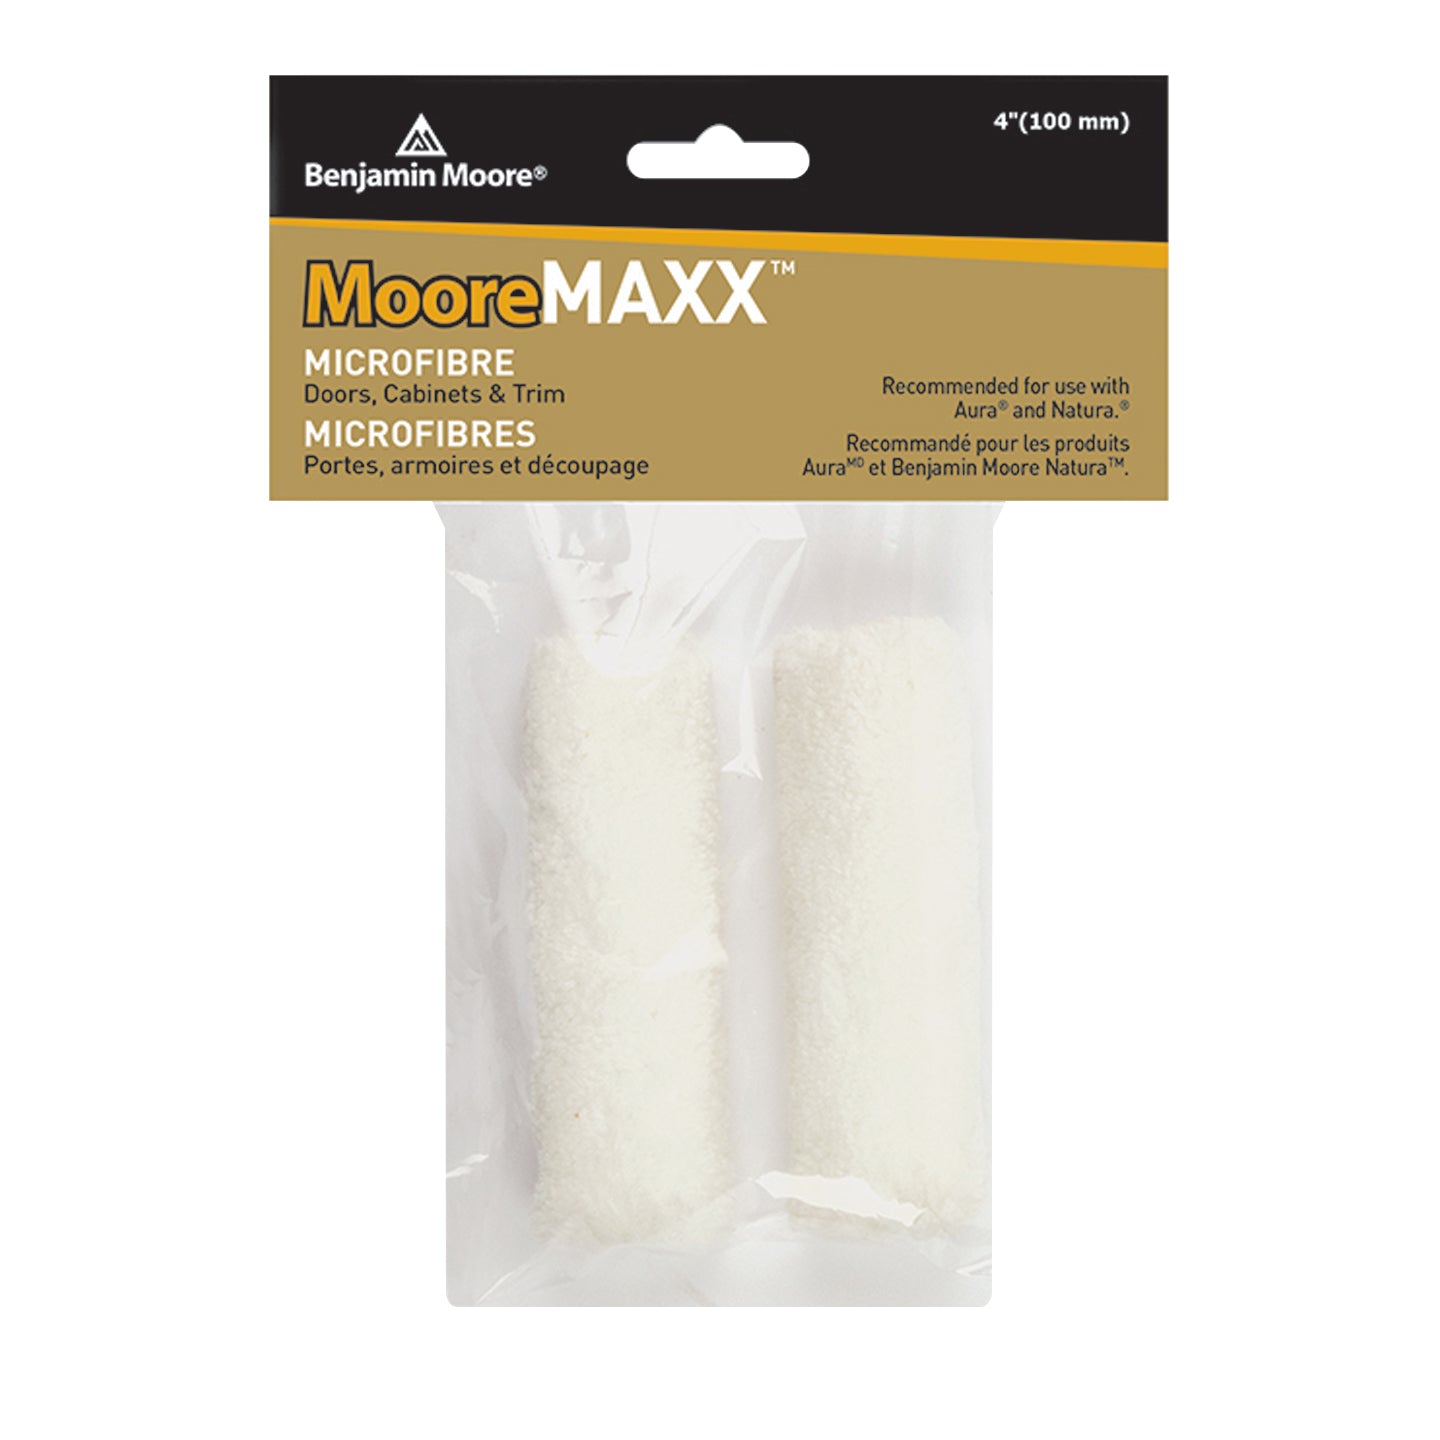 MooreMaxx 4" Microfibre 10mm Roller (100mm Width) (2Pk)